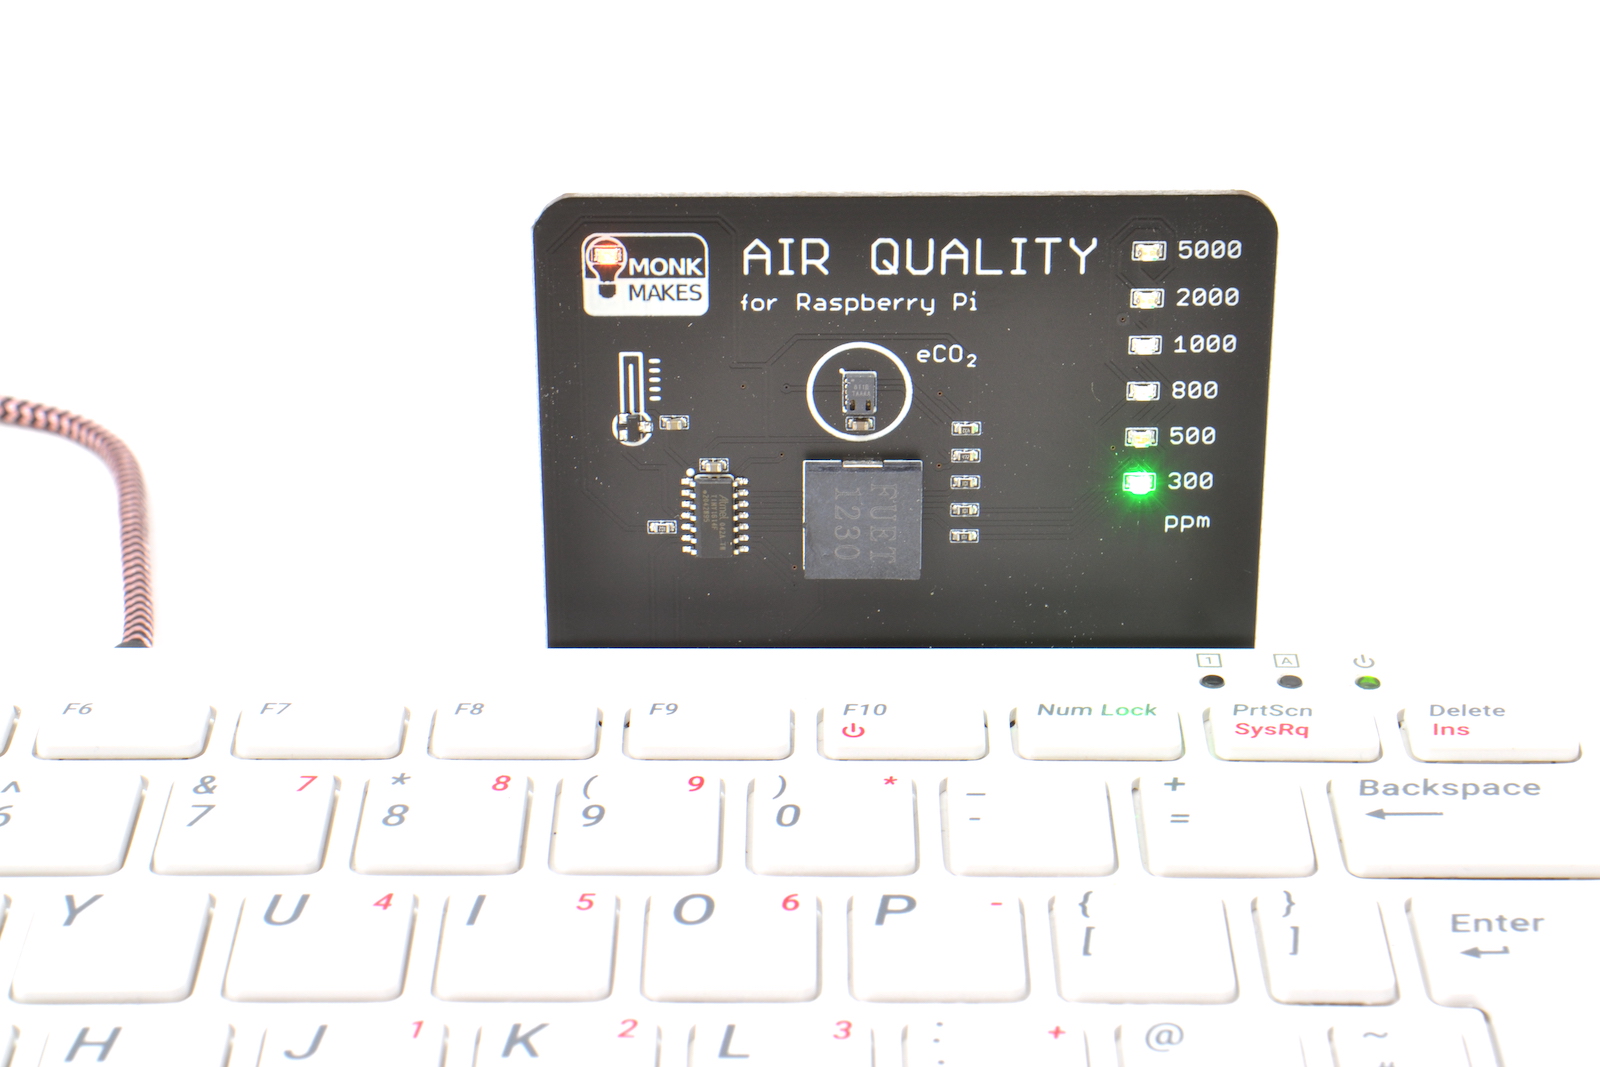 Air Quality Kit for Raspberry Pi